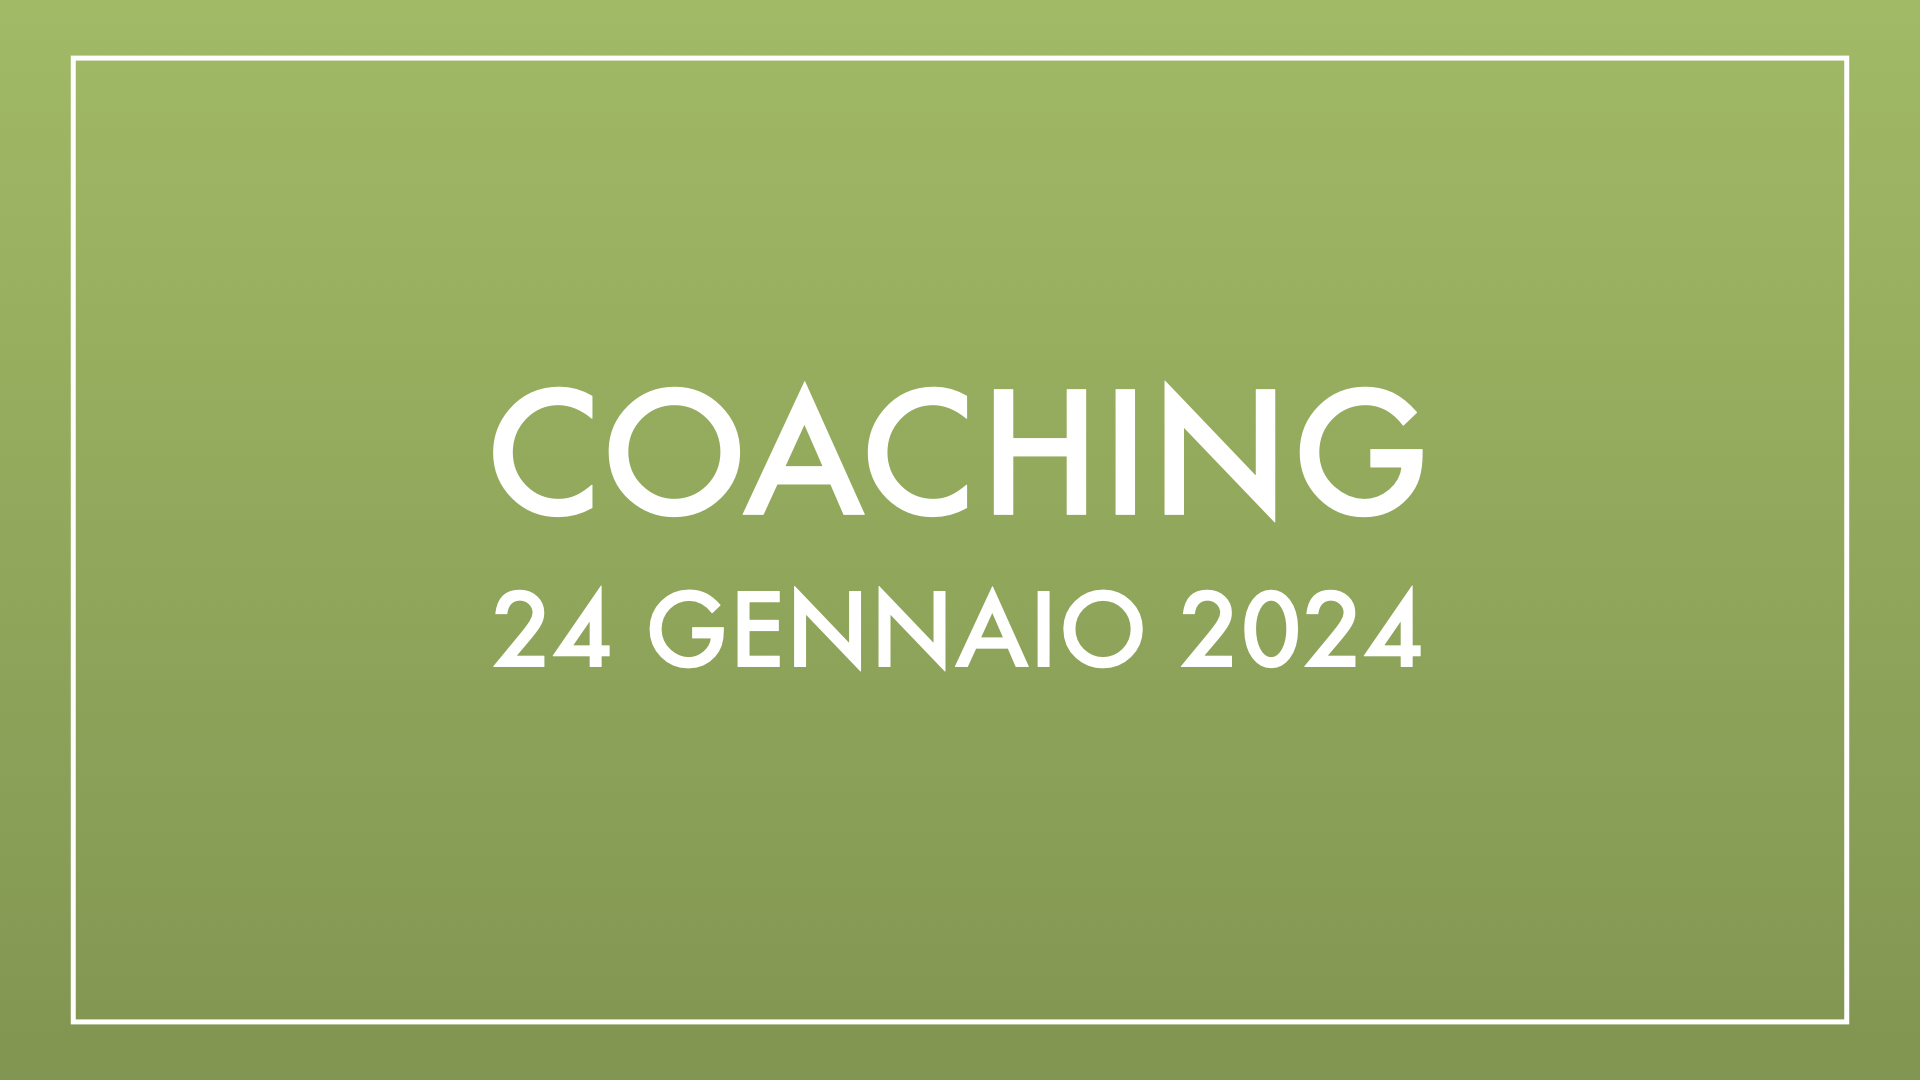 Coaching 24 gennaio 2024